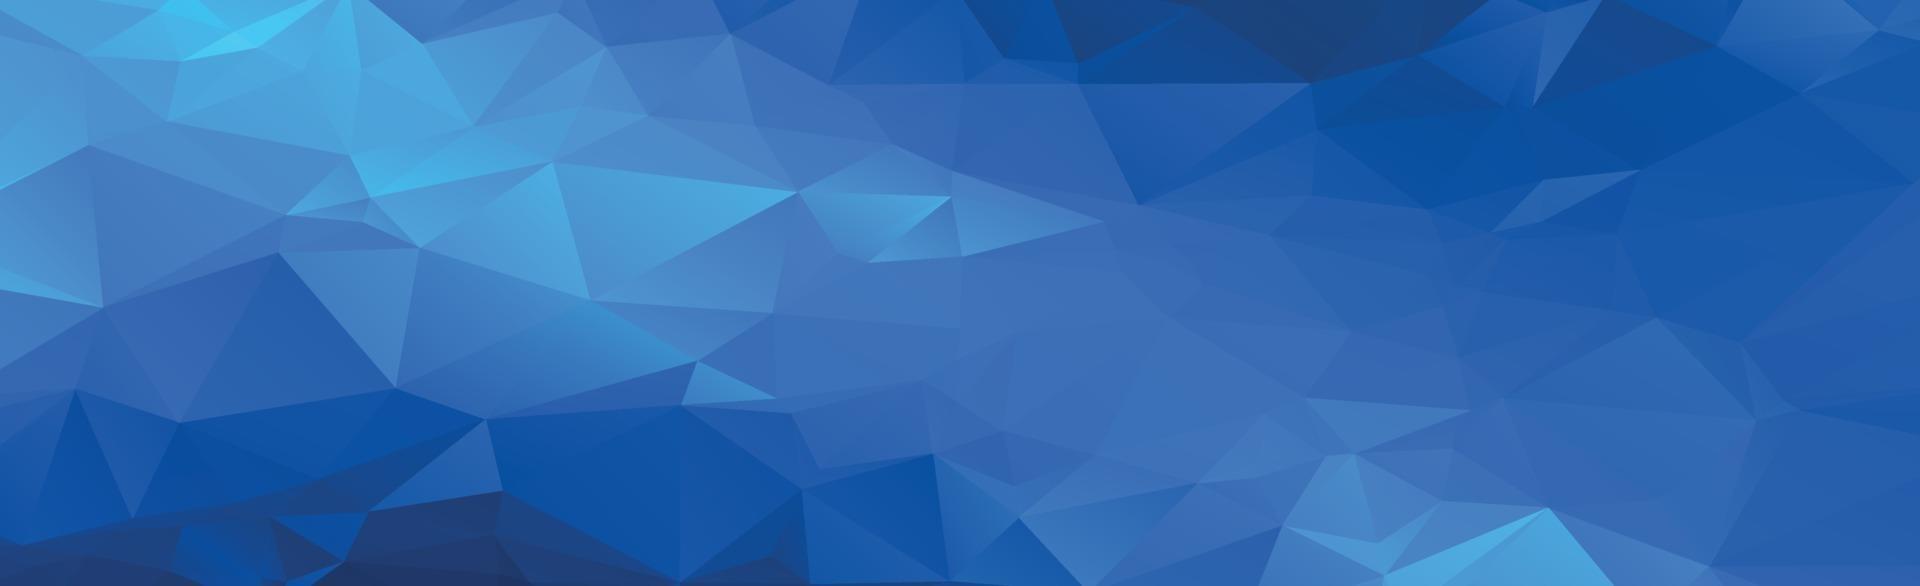 fundo panorâmico abstrato com triângulos azuis - vetor